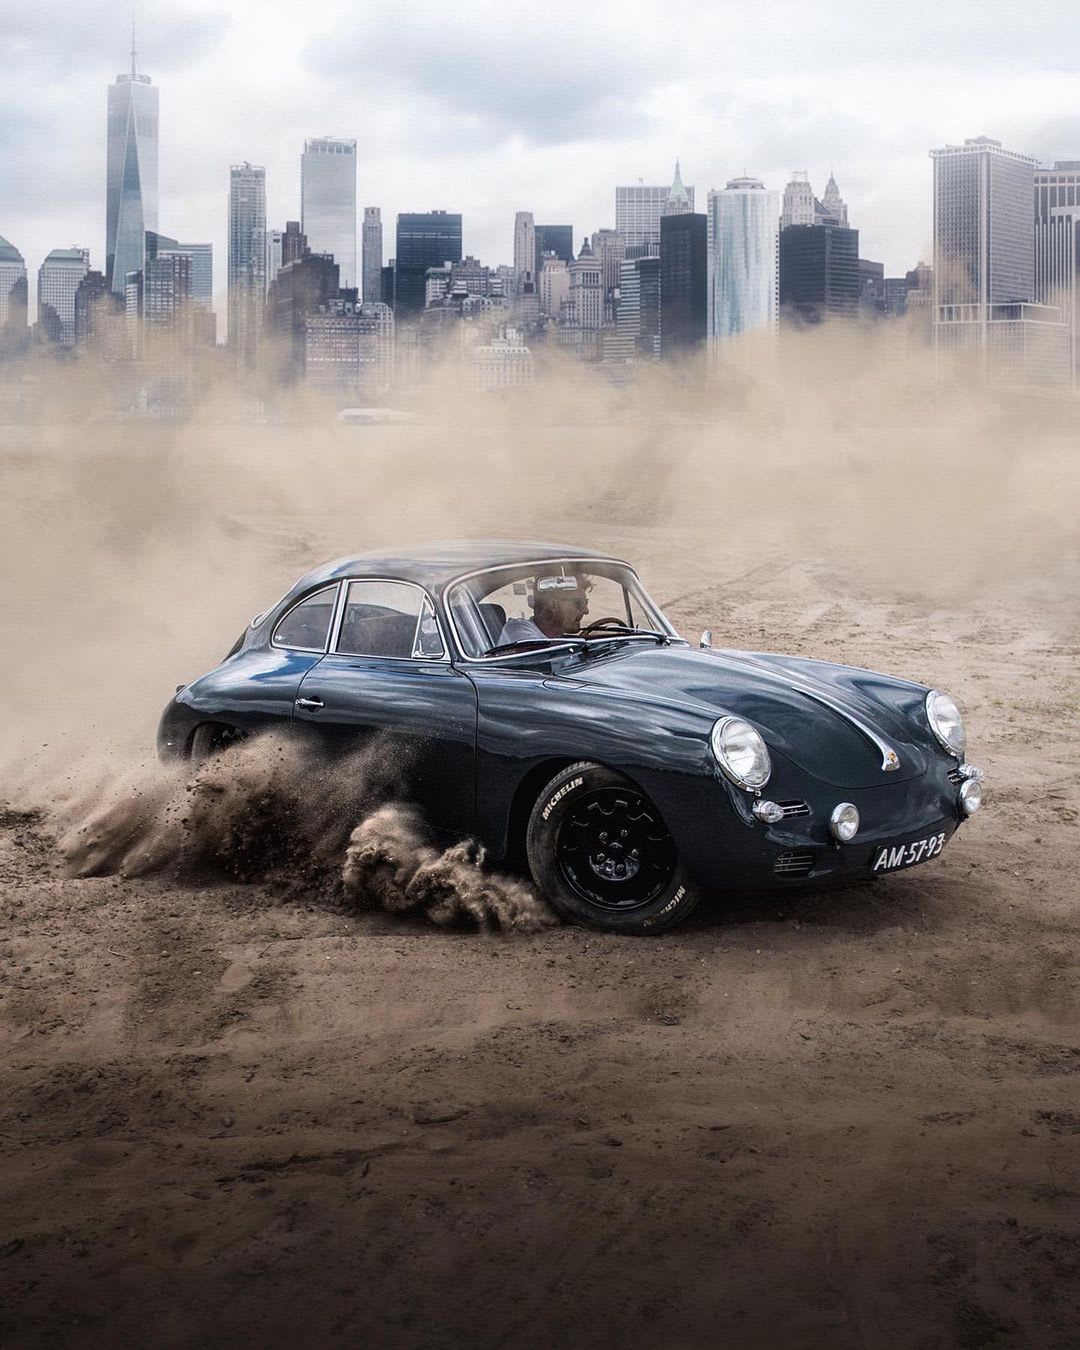 Just a Porsche 356C in the dirt